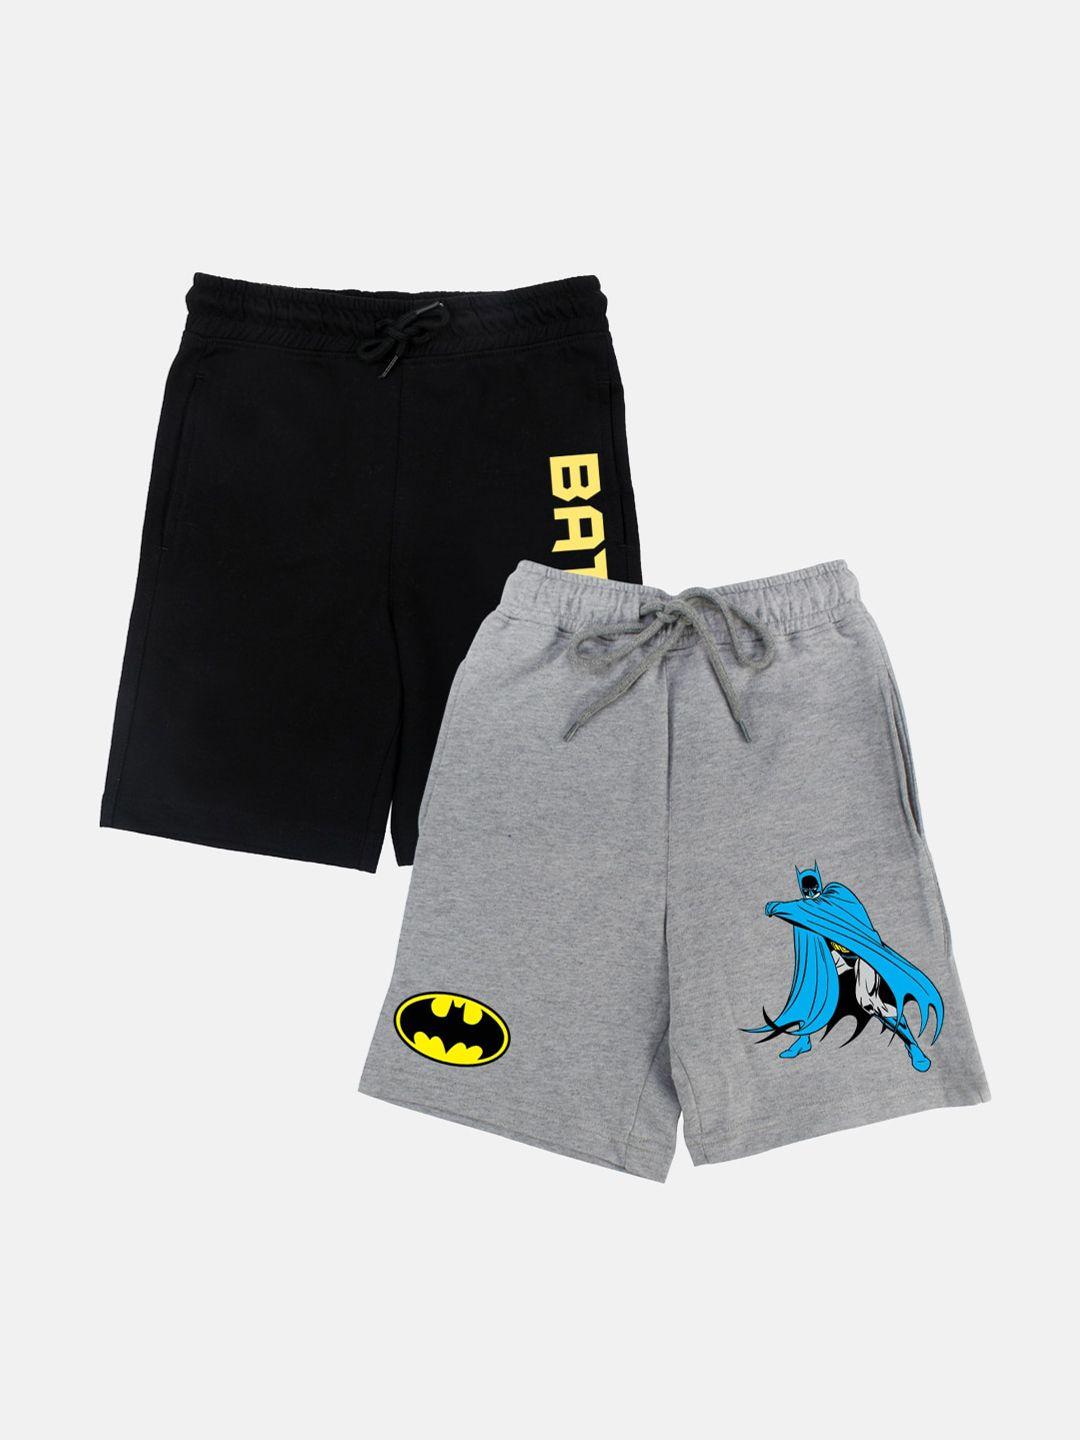 yk justice league boys pack of 2 batman printed shorts